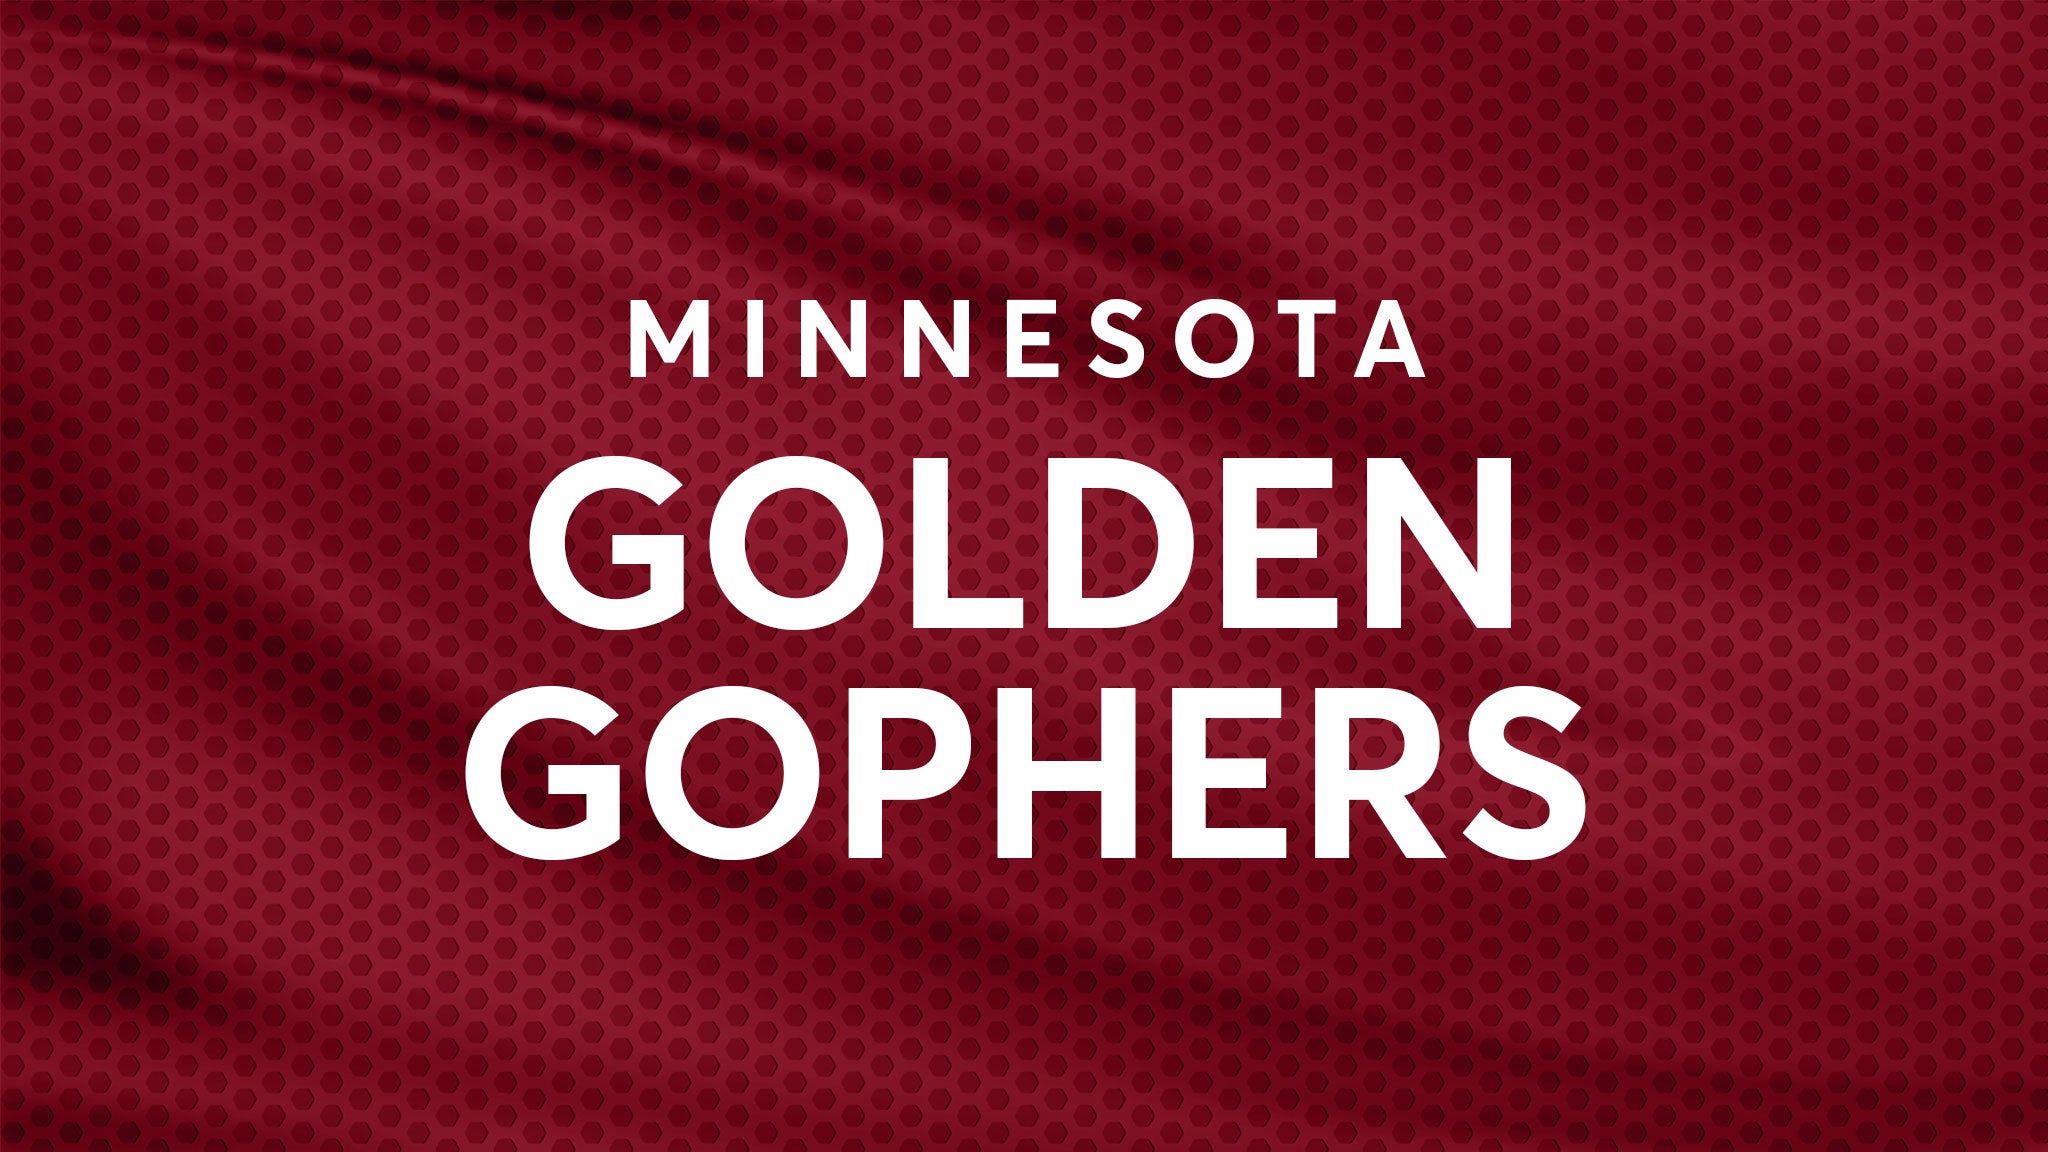 Minnesota Gophers Football vs. Penn State Nittany Lions Football hero